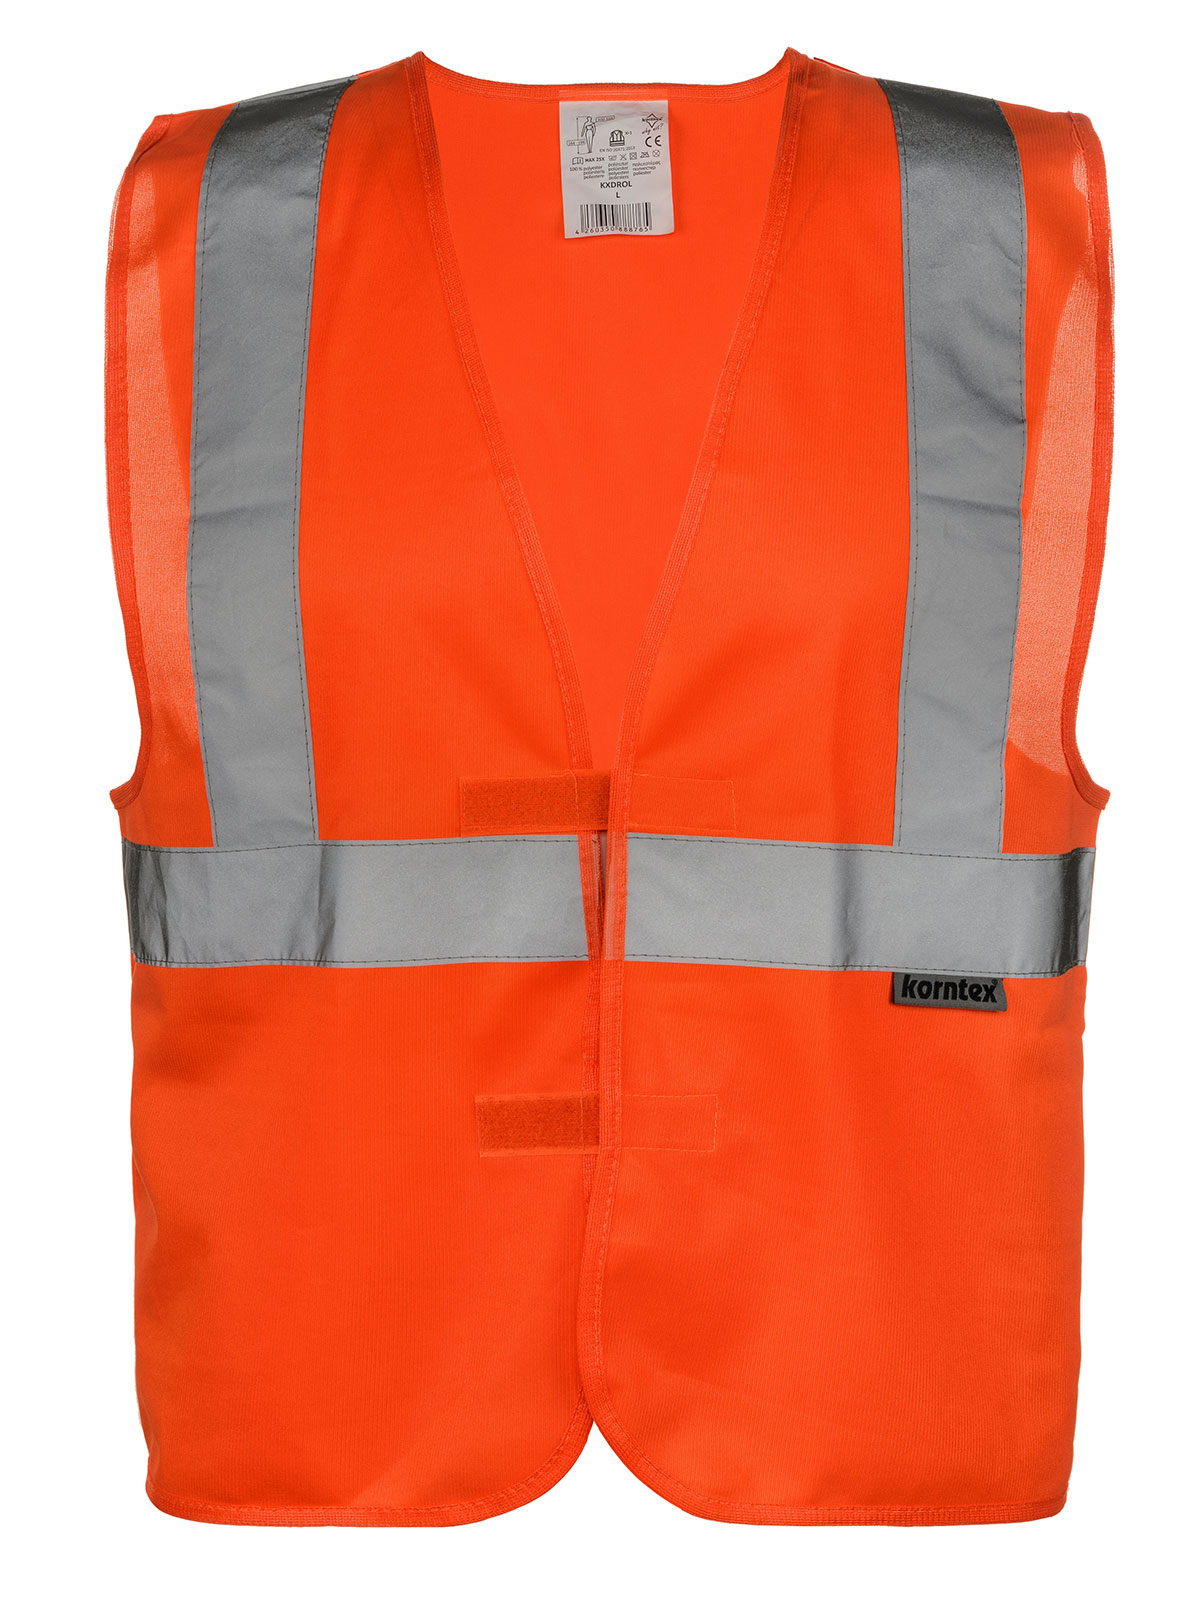 safety-vest-with-3-reflective-tapes-orange.webp